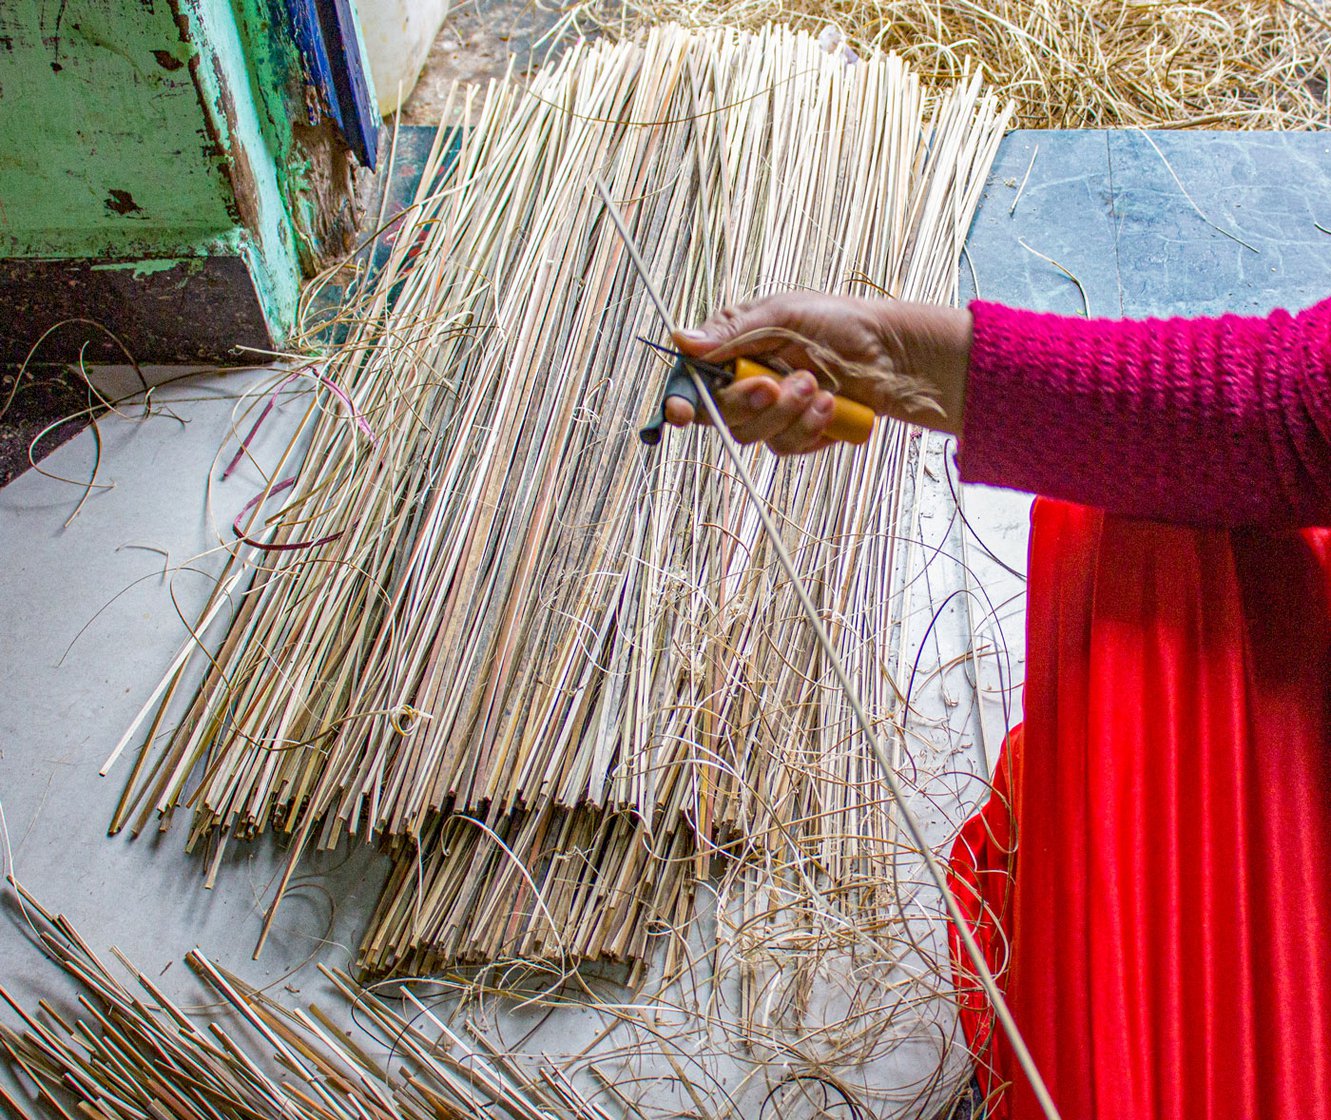 Aashaben, in Khambhat's Chunarvad area, peels and shapes the bamboo sticks.